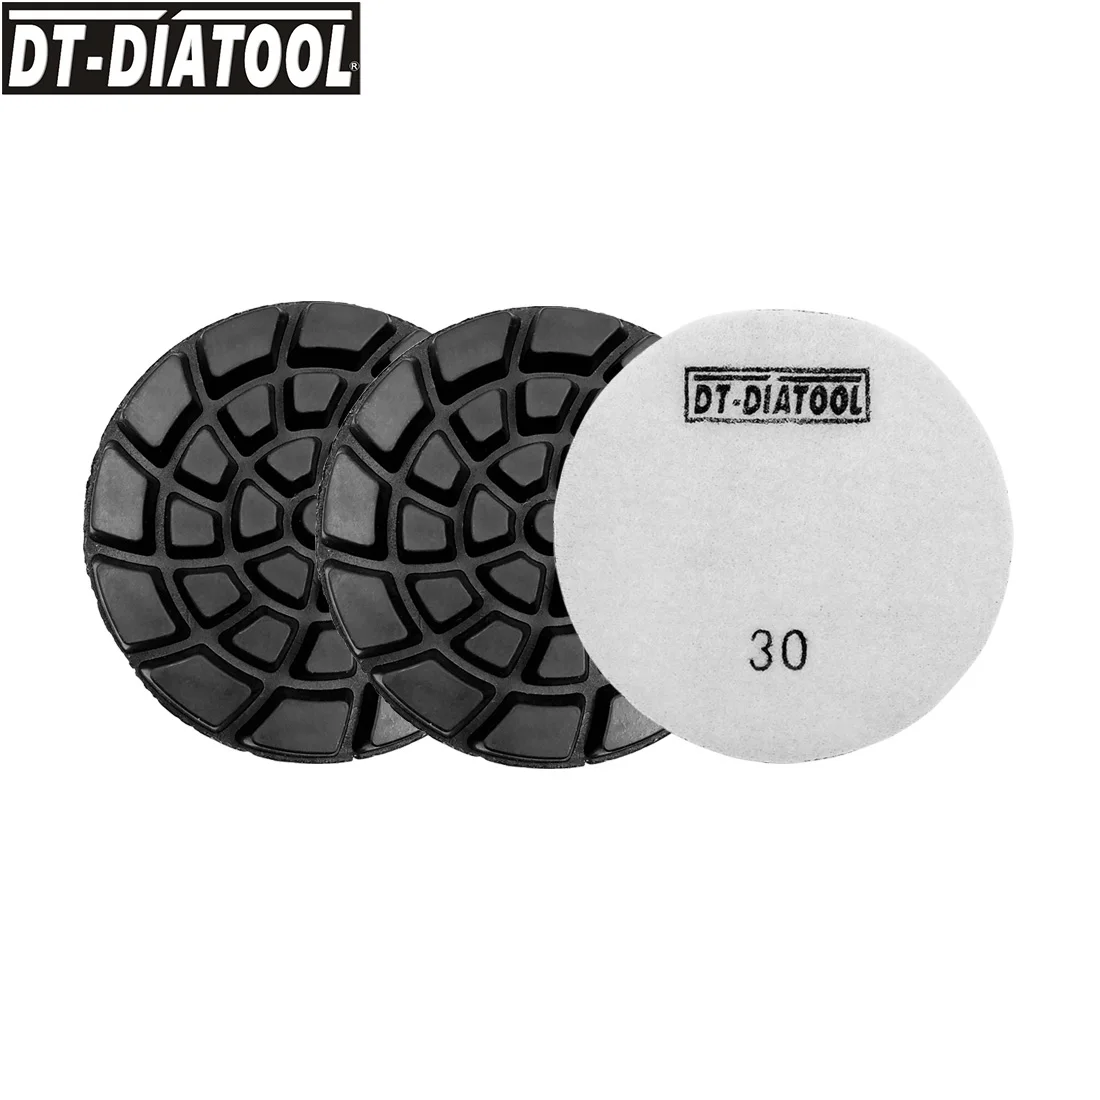 DT-DIATOOL 3pcs/pk Grits #30 Resin Bond Diamond Concrete Polishing Pads Nylon Backed Floor Renew Sanding Discs Dia 100mm/4